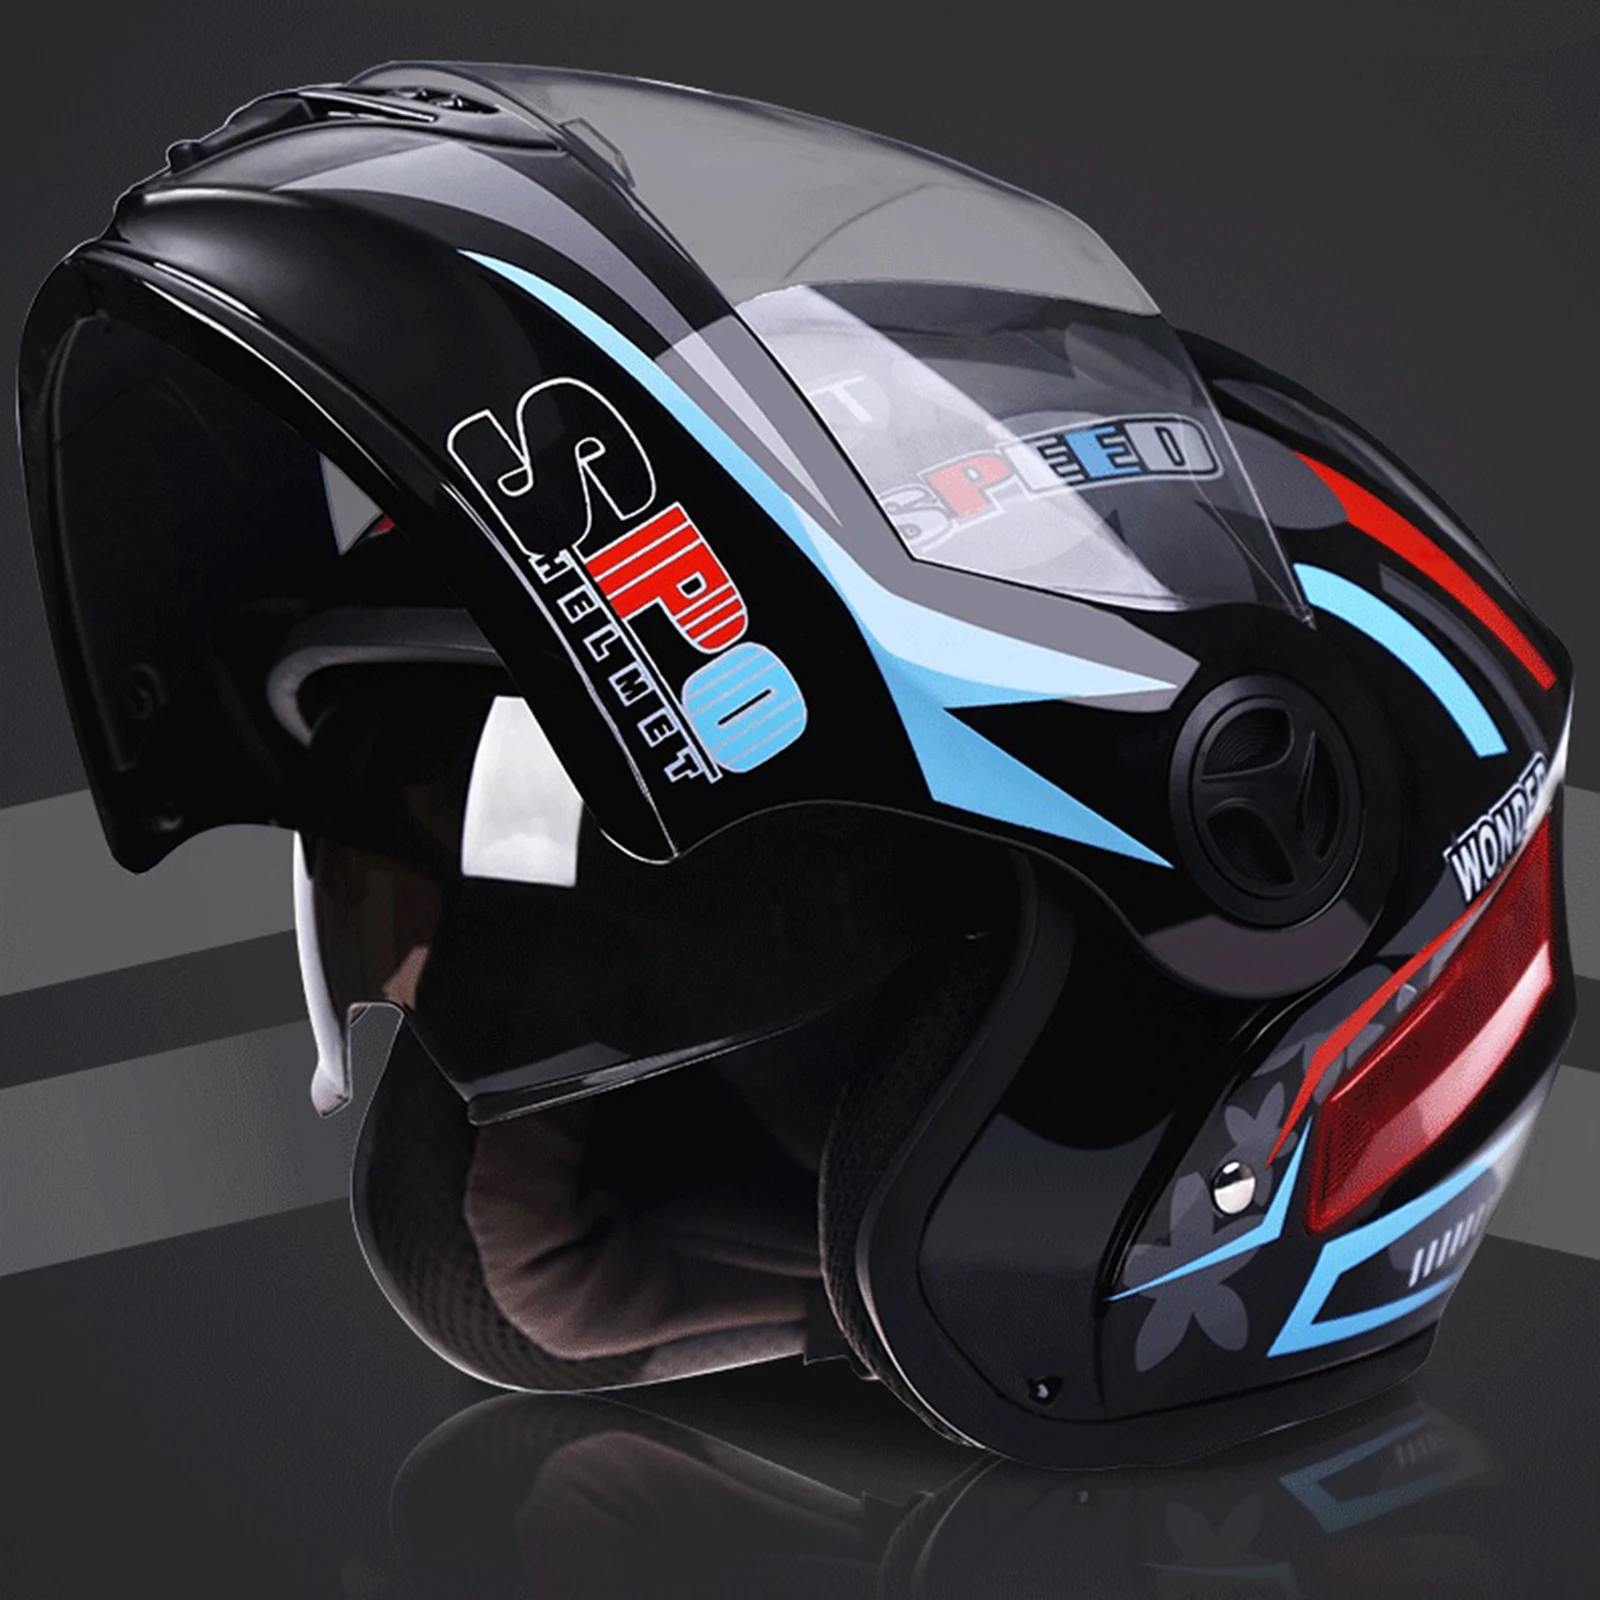 Modular Motorcycle Helmet Double Air Vents Aerodynamic Off-Road Dirt Bike